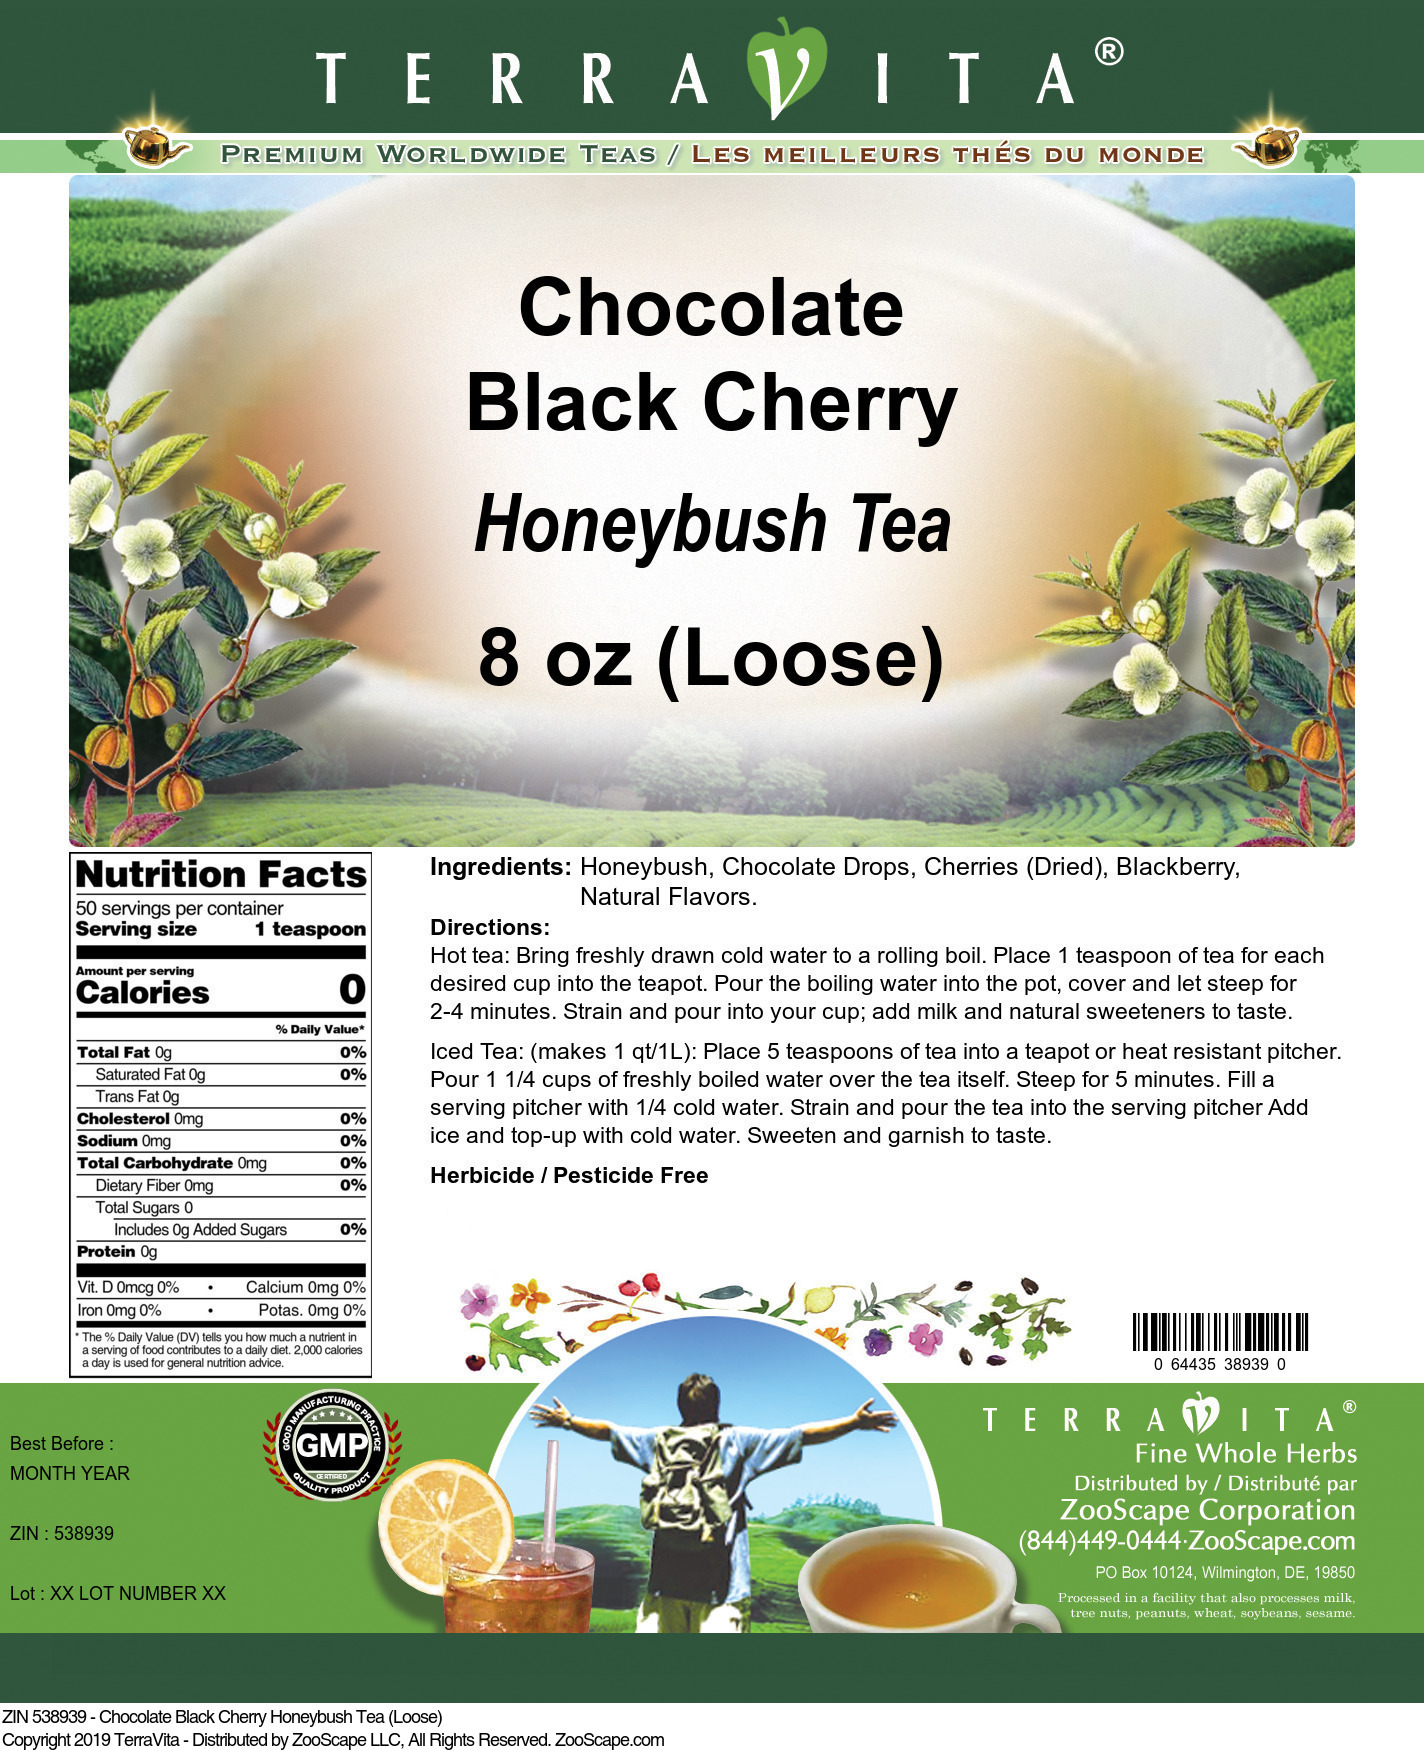 Chocolate Black Cherry Honeybush Tea (Loose) - Label